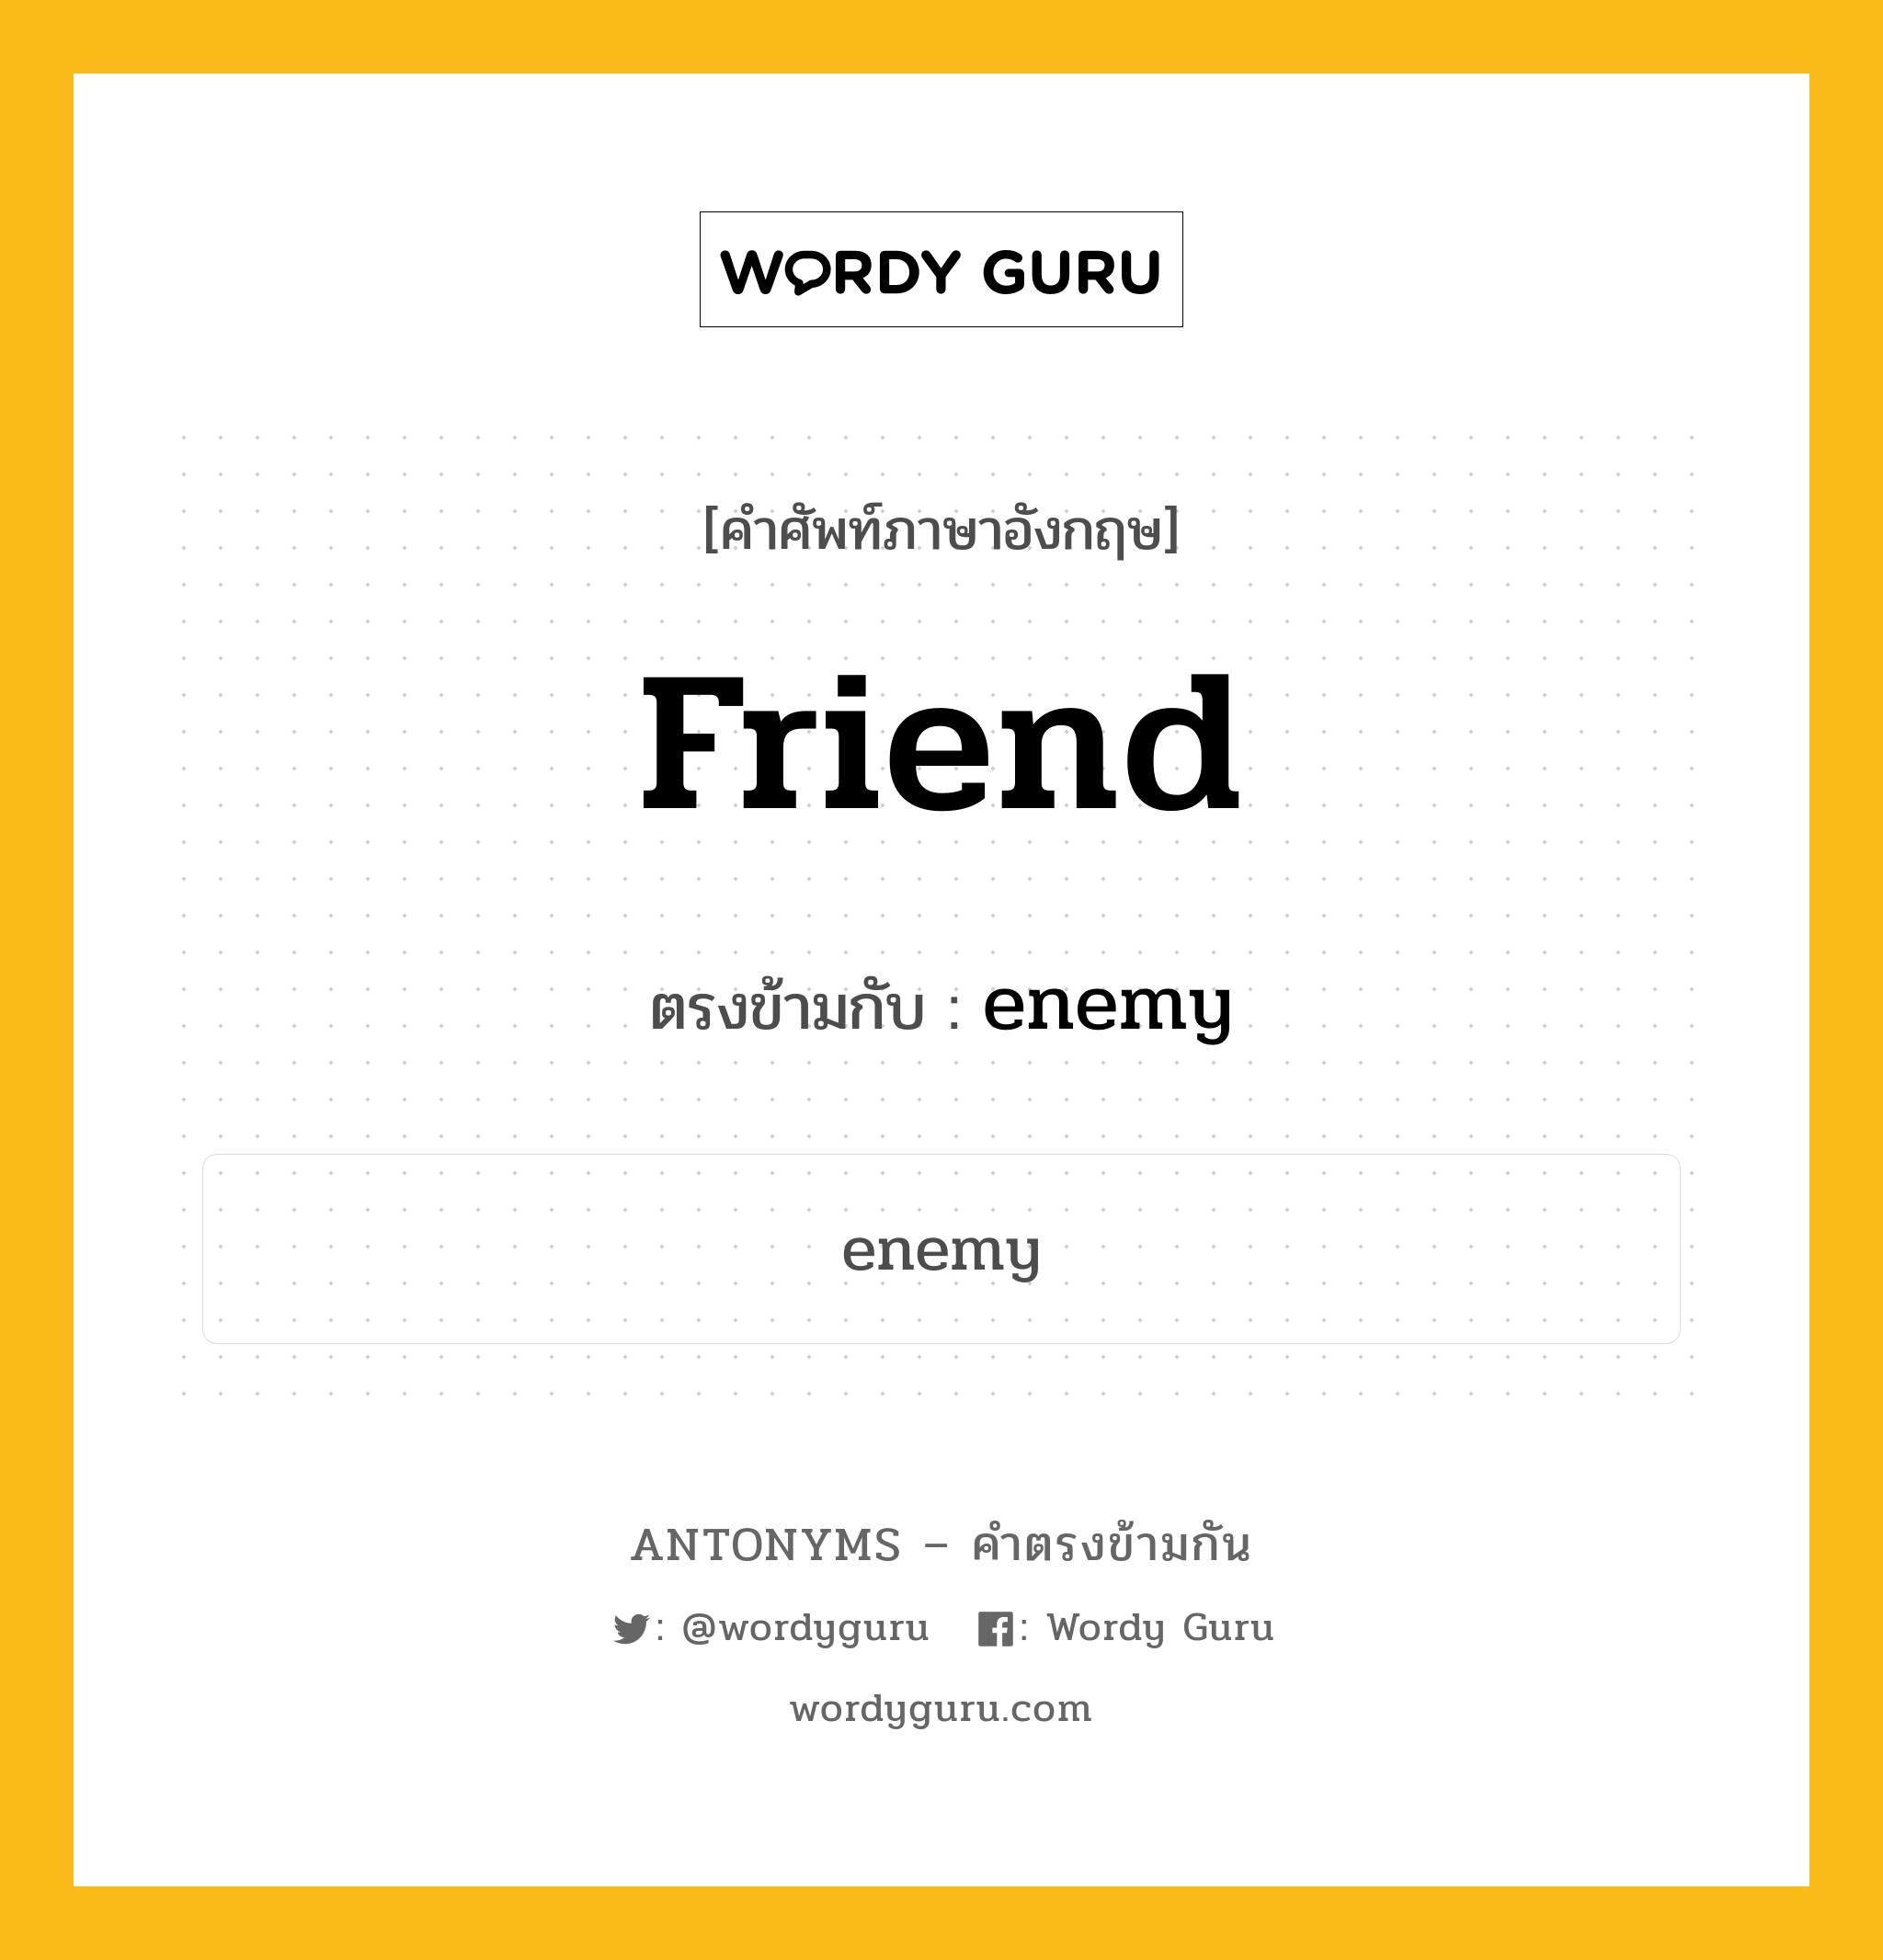 friend เป็นคำตรงข้ามกับคำไหนบ้าง?, คำศัพท์ภาษาอังกฤษ friend ตรงข้ามกับ enemy หมวด enemy